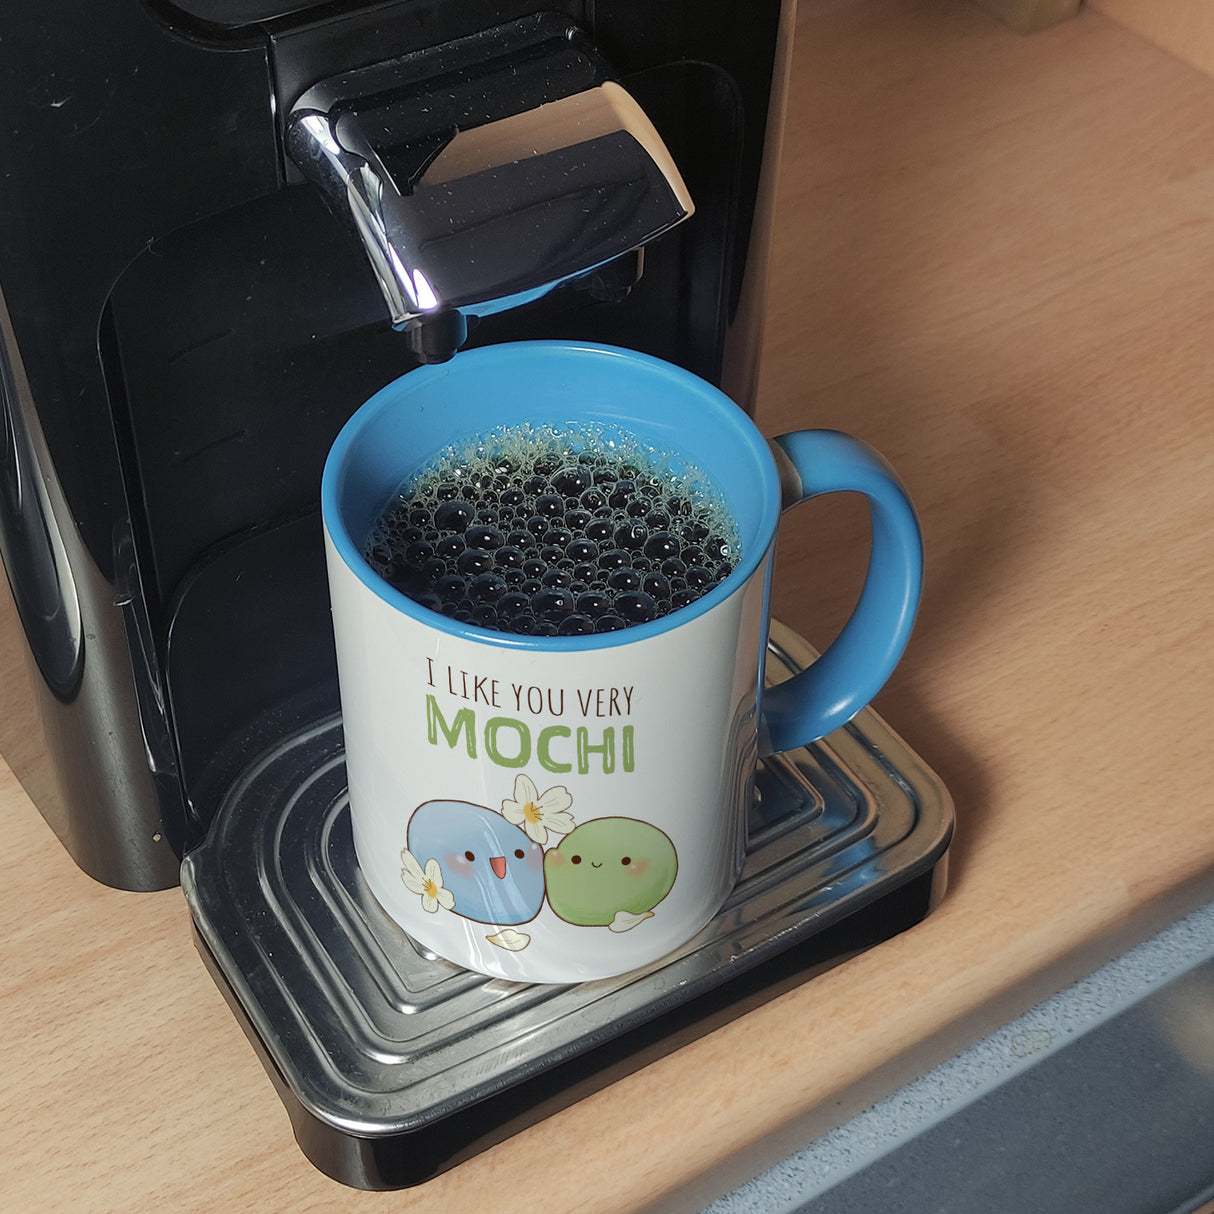 Mochi Freunde Kaffeebecher mit Spruch I like you very Mochi